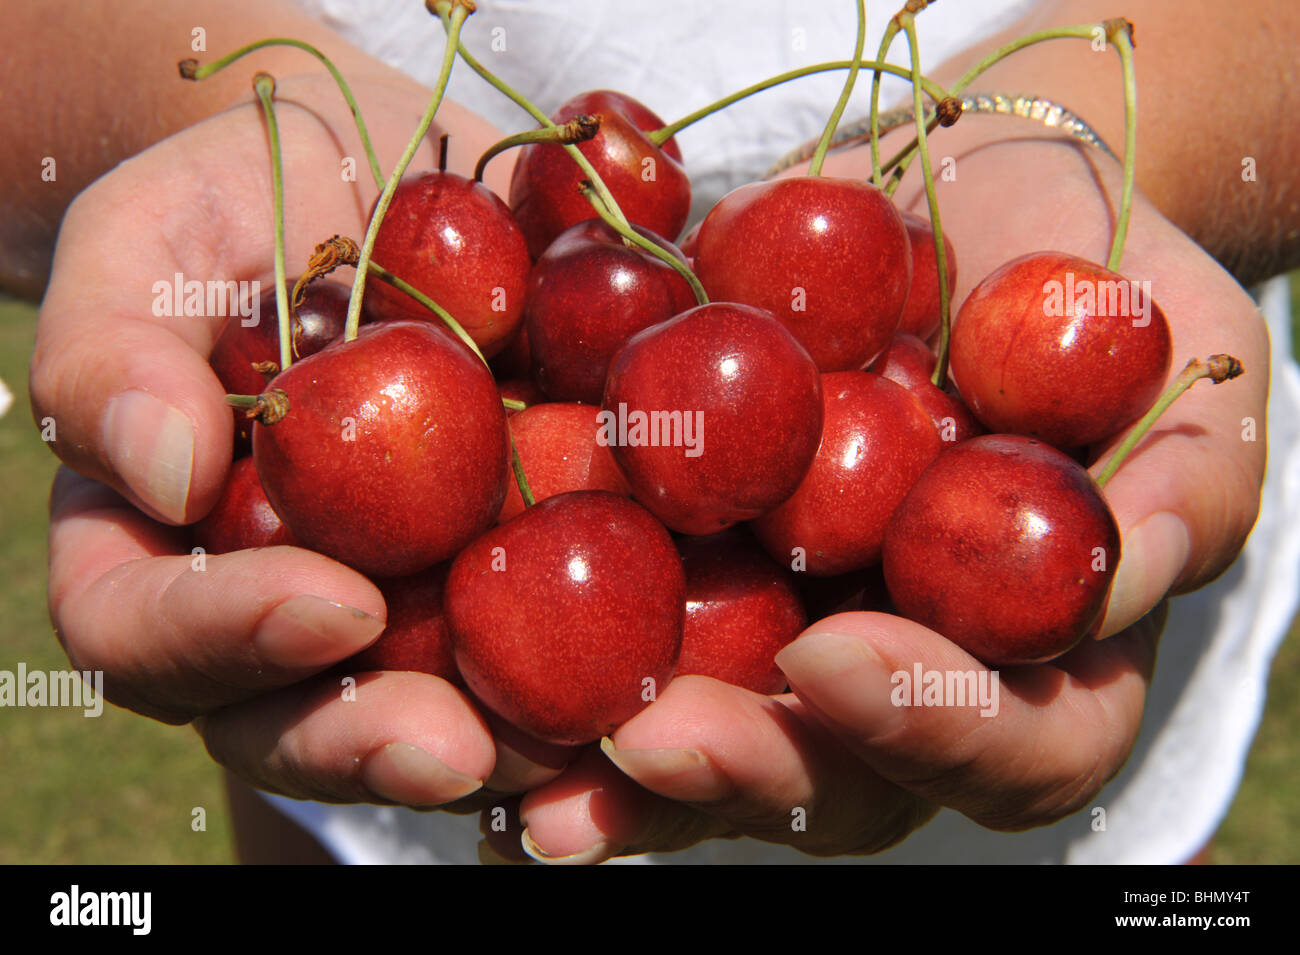 A handfull of freshly picked cherries Stock Photo